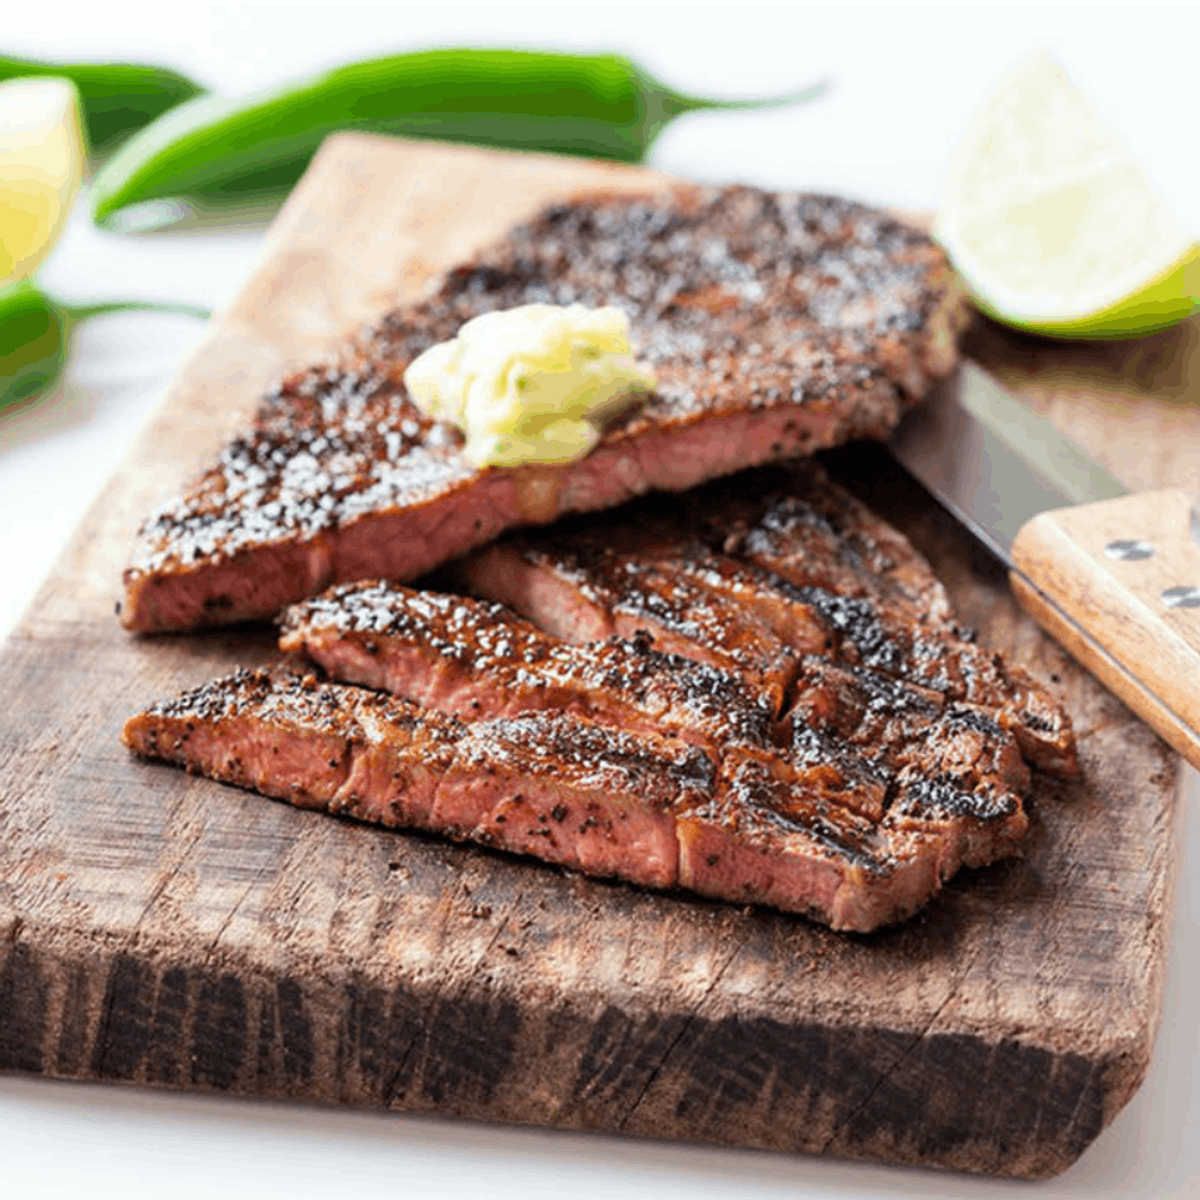 5 Juicy Steaks to Eat When You’re Feeling Totally Primal